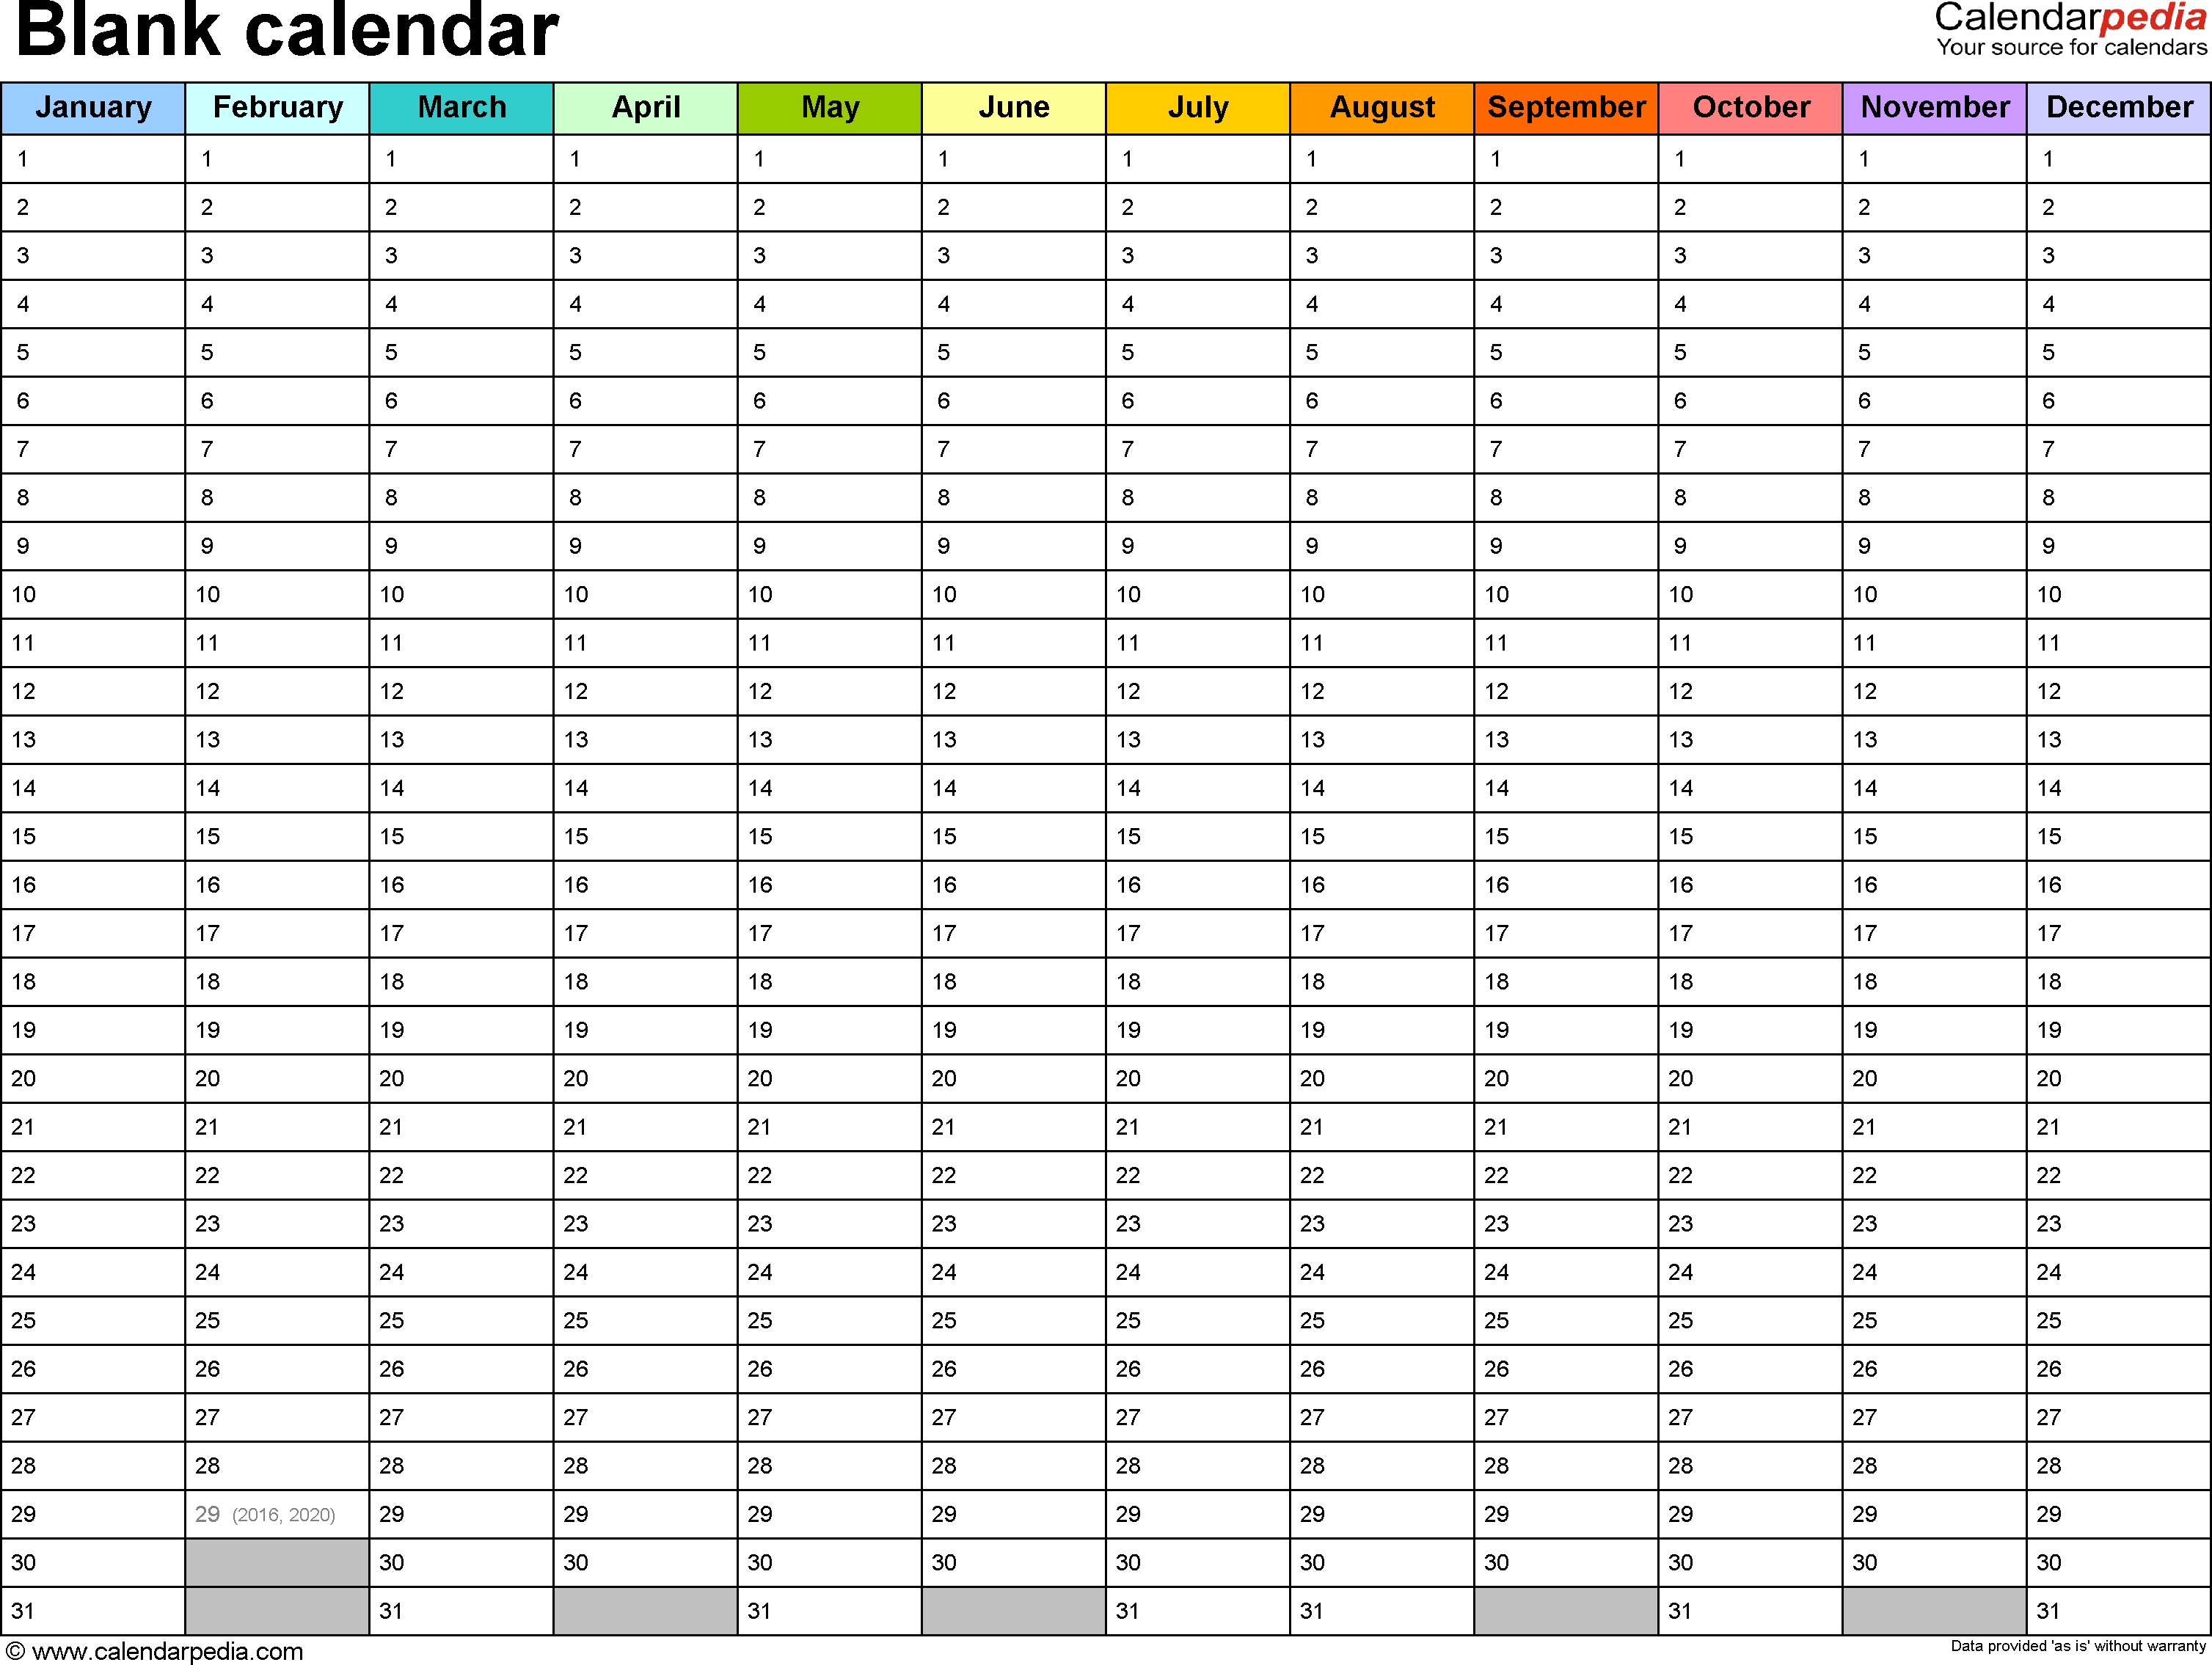 Blank Calendar - 9 Free Printable Microsoft Word Templates  Year At A Glance Calendars Printable